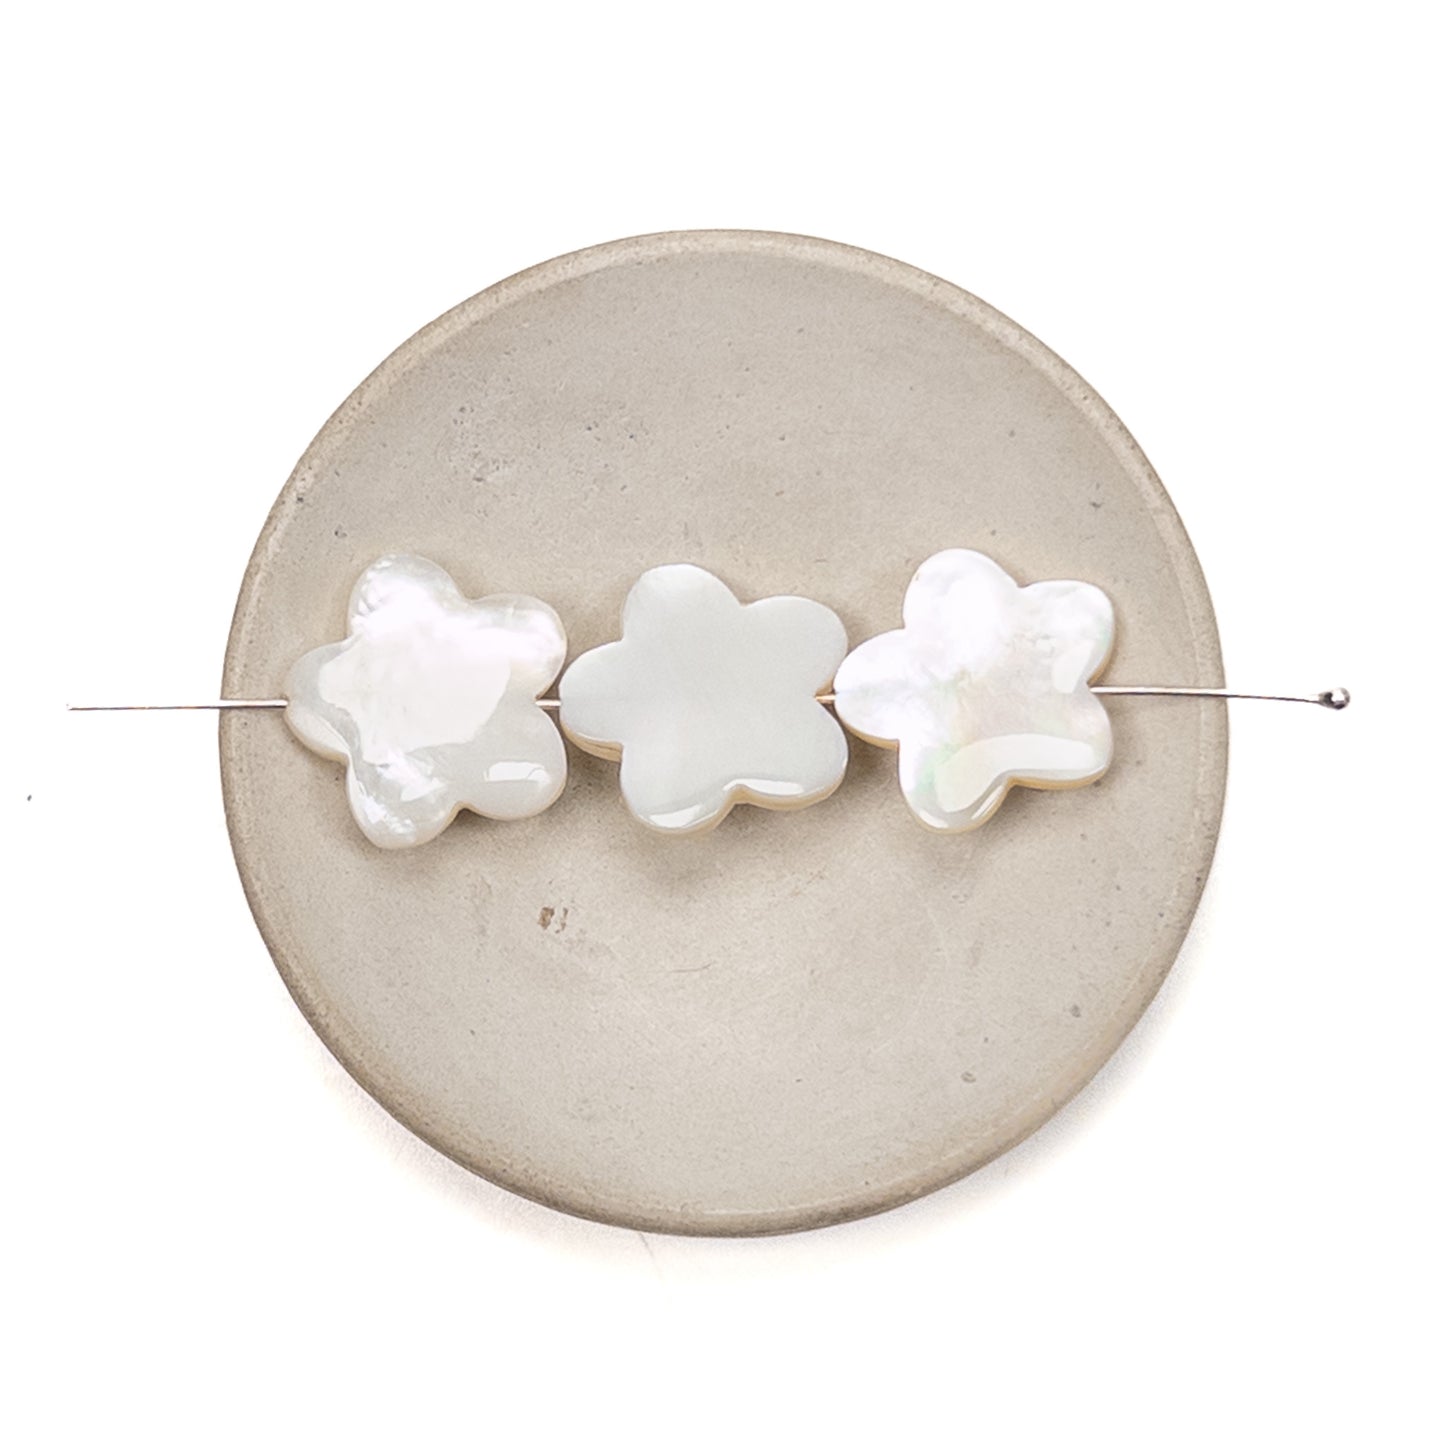 White Mother of Pearl 18mm Flat 5-Petal Flower Bead - 1 pc.-The Bead Gallery Honolulu